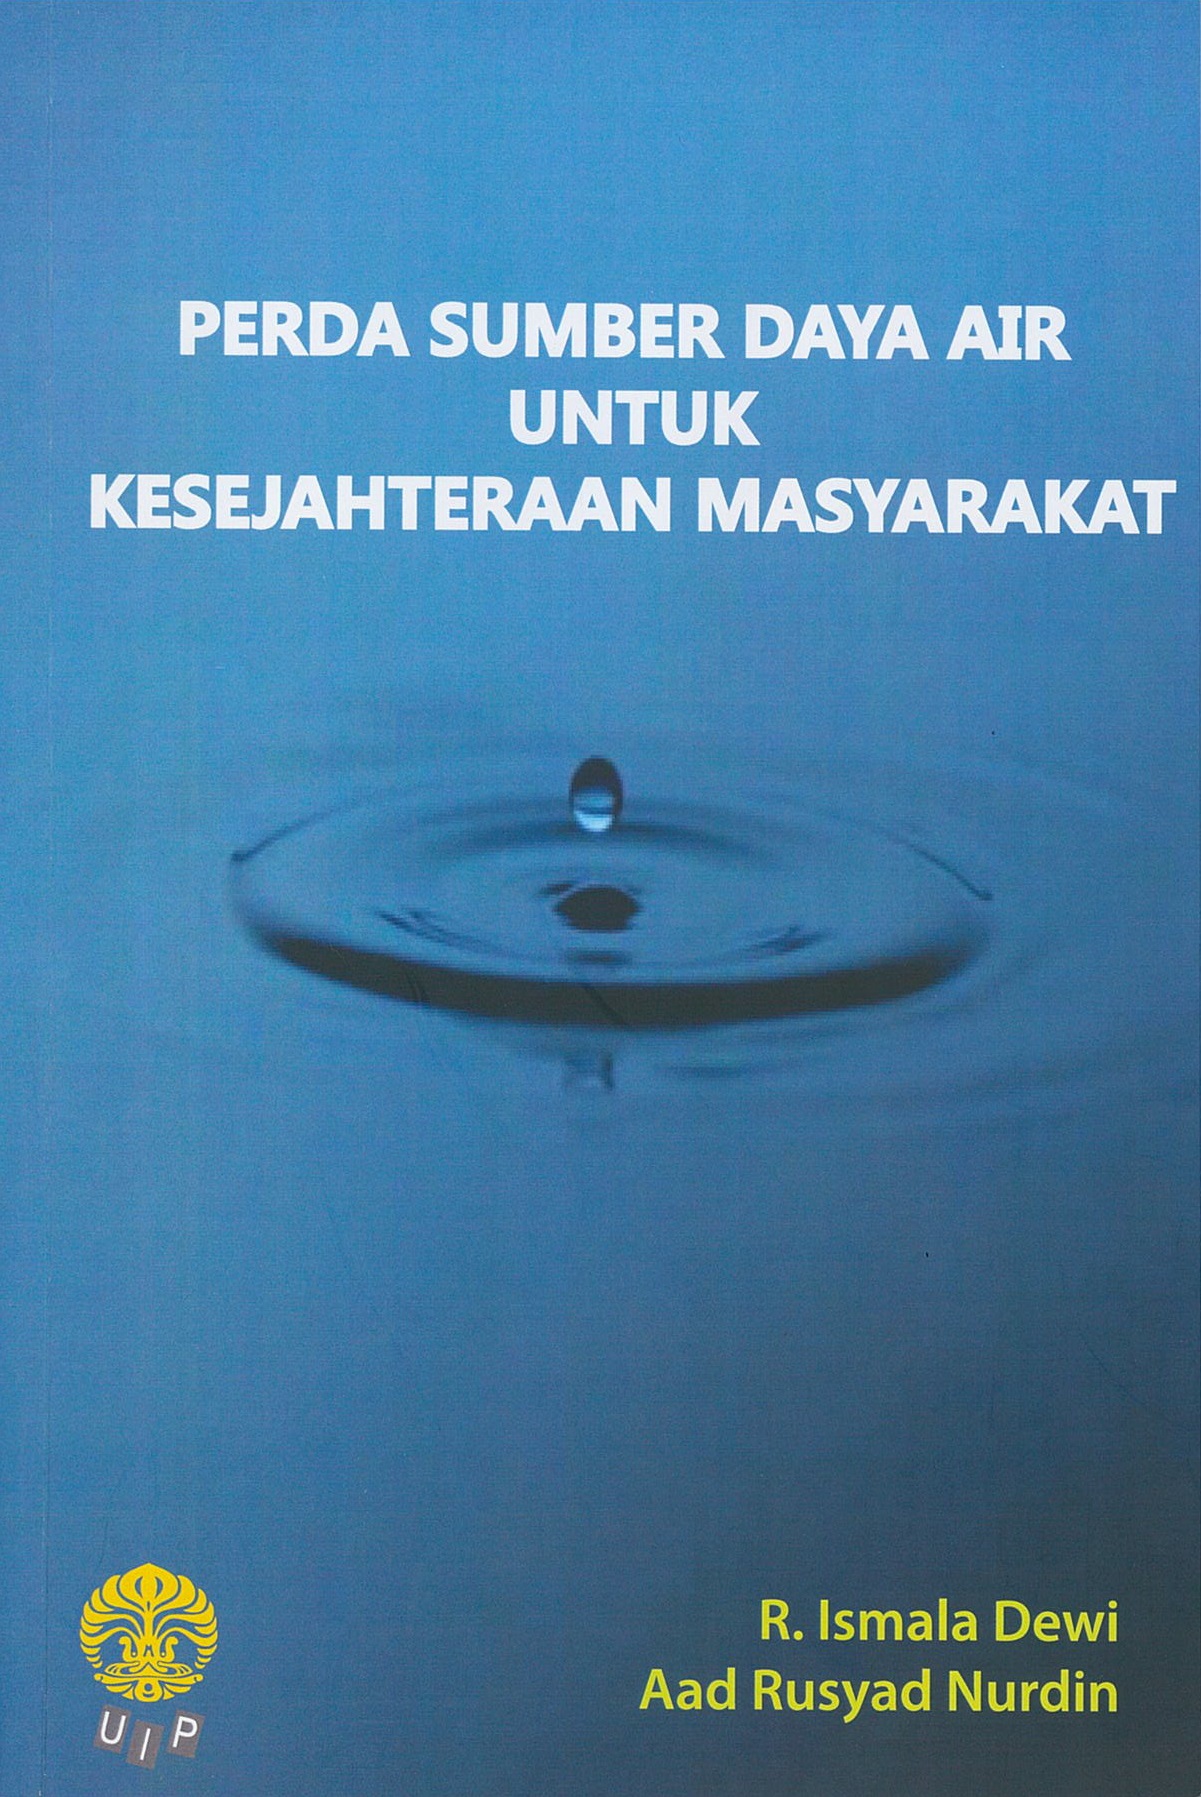 Perda sumber daya air untuk kesejahteraan masyarakat